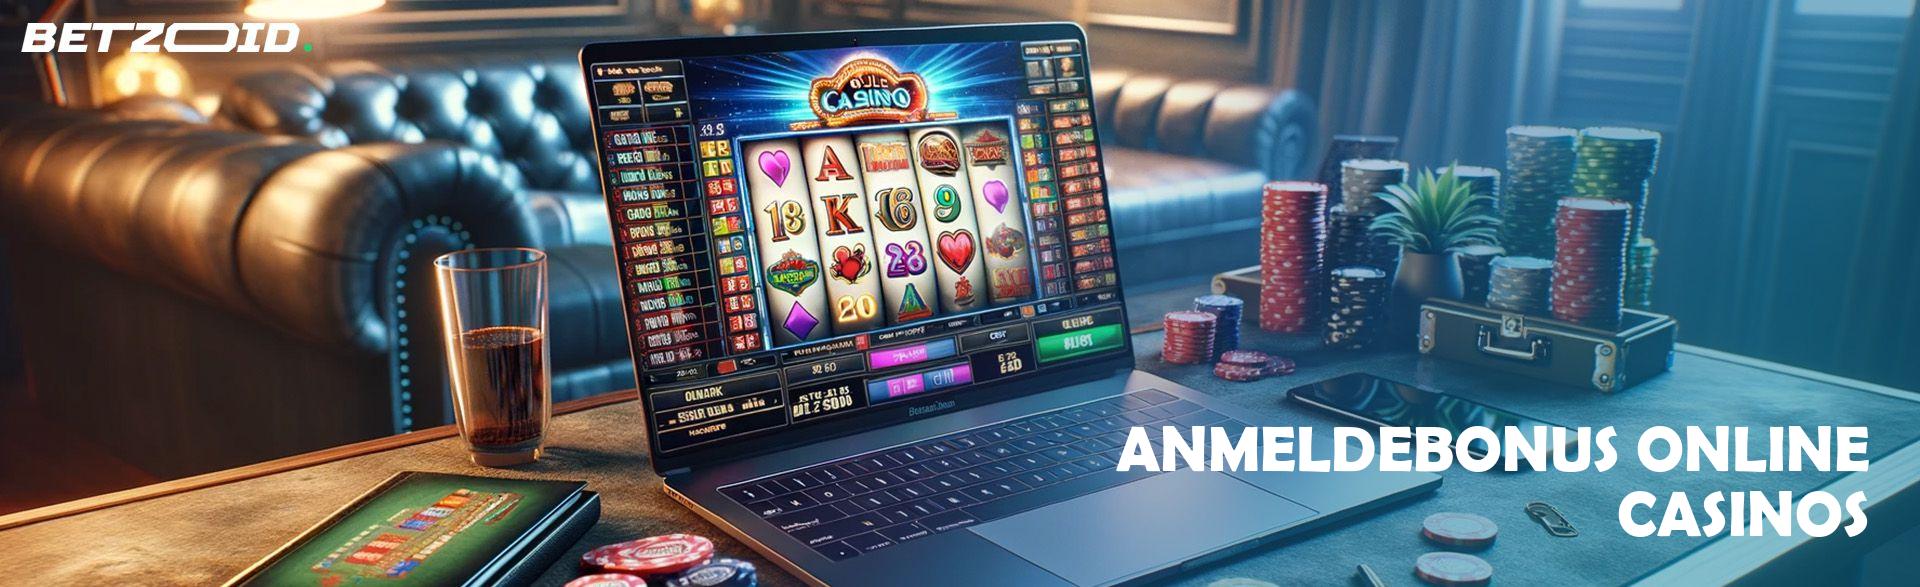 Anmeldebonus Online Casinos.